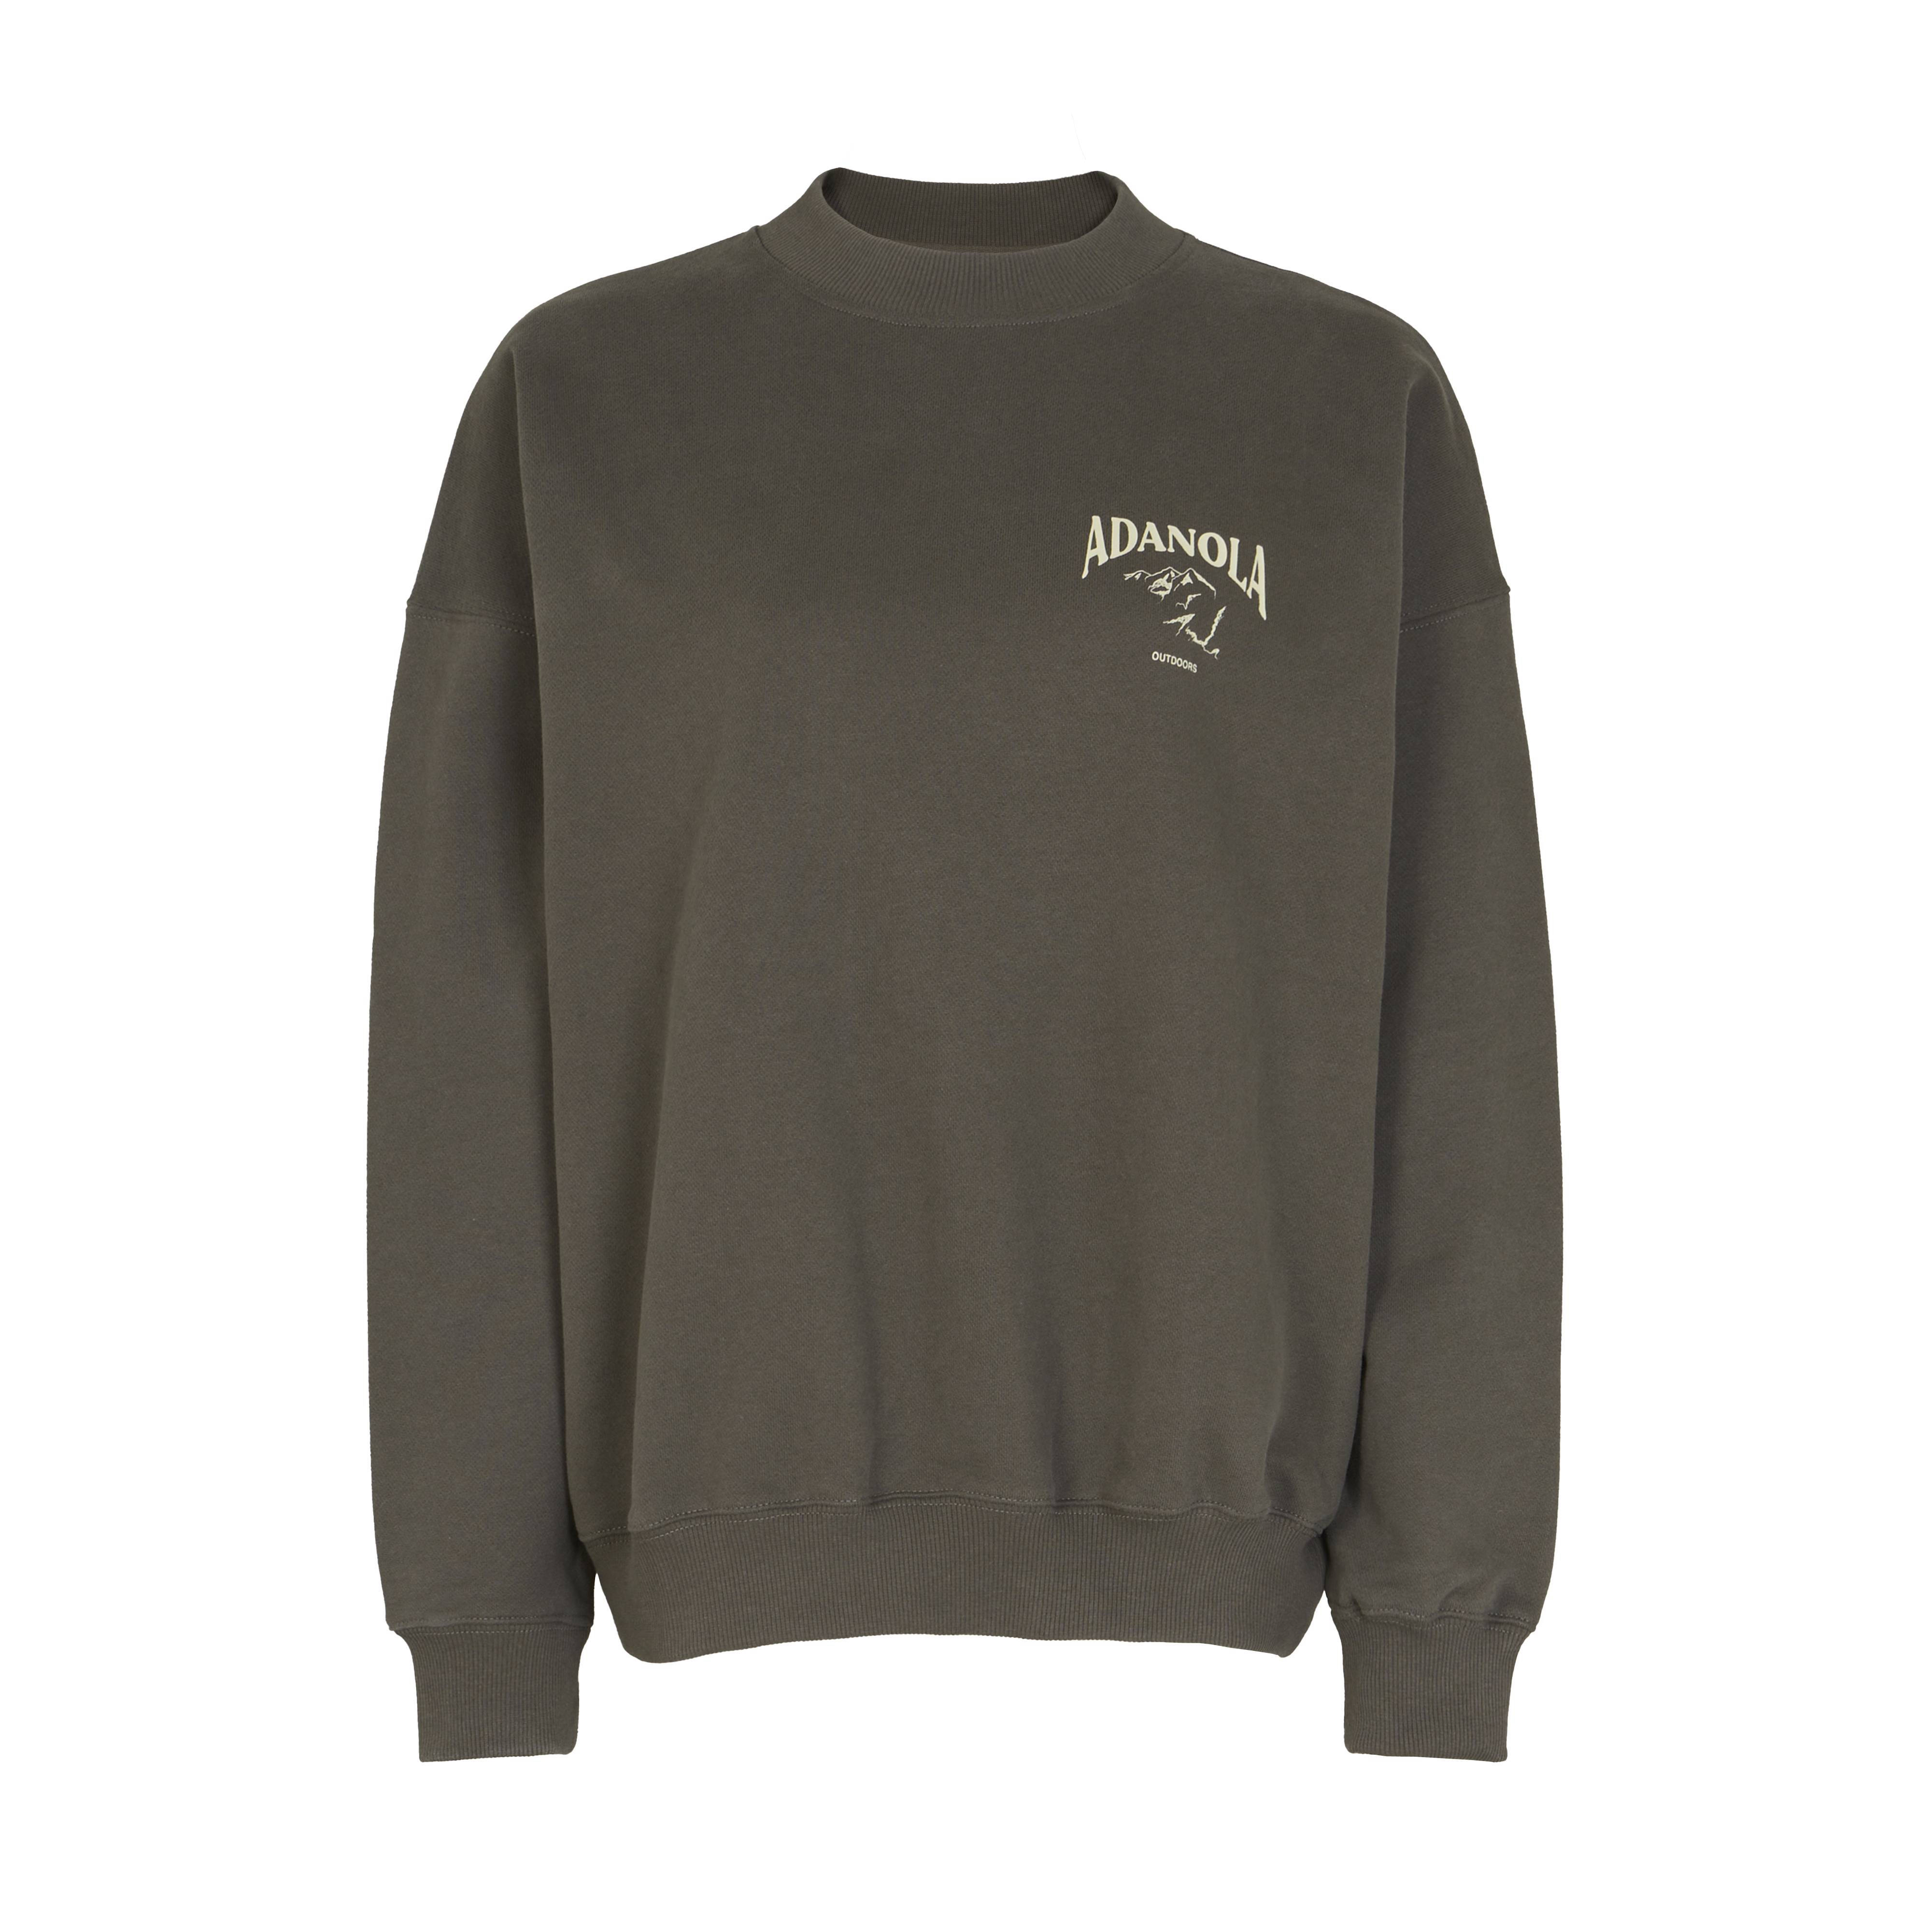 Adanola Oversized Sweatshirt Outdoors - Brown | The Sole Supplier